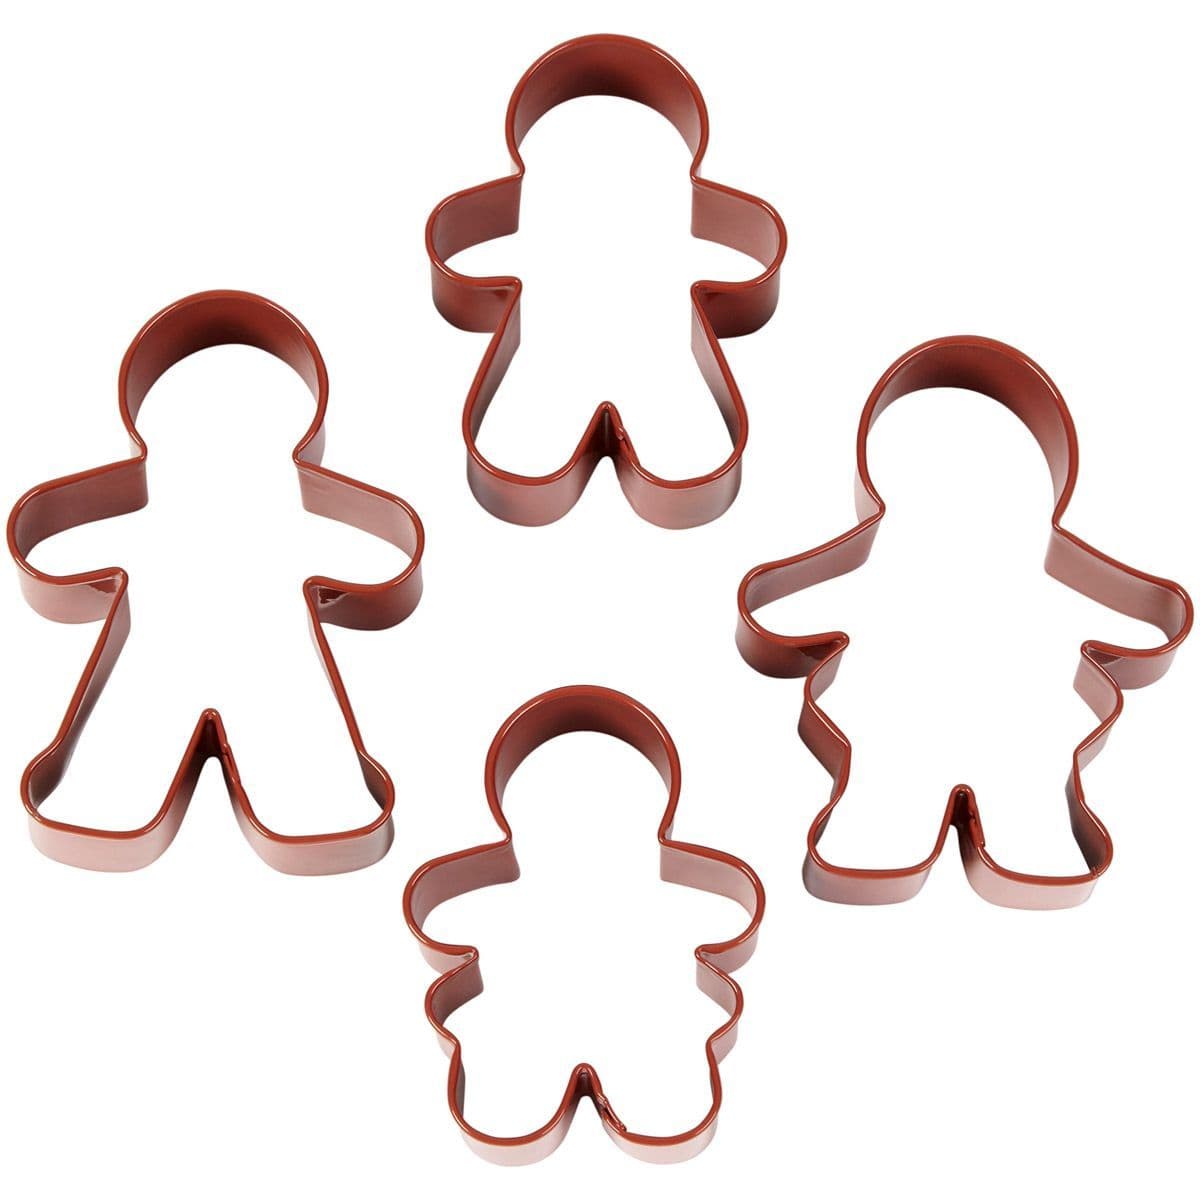 Wilton Gingerbread Family Set